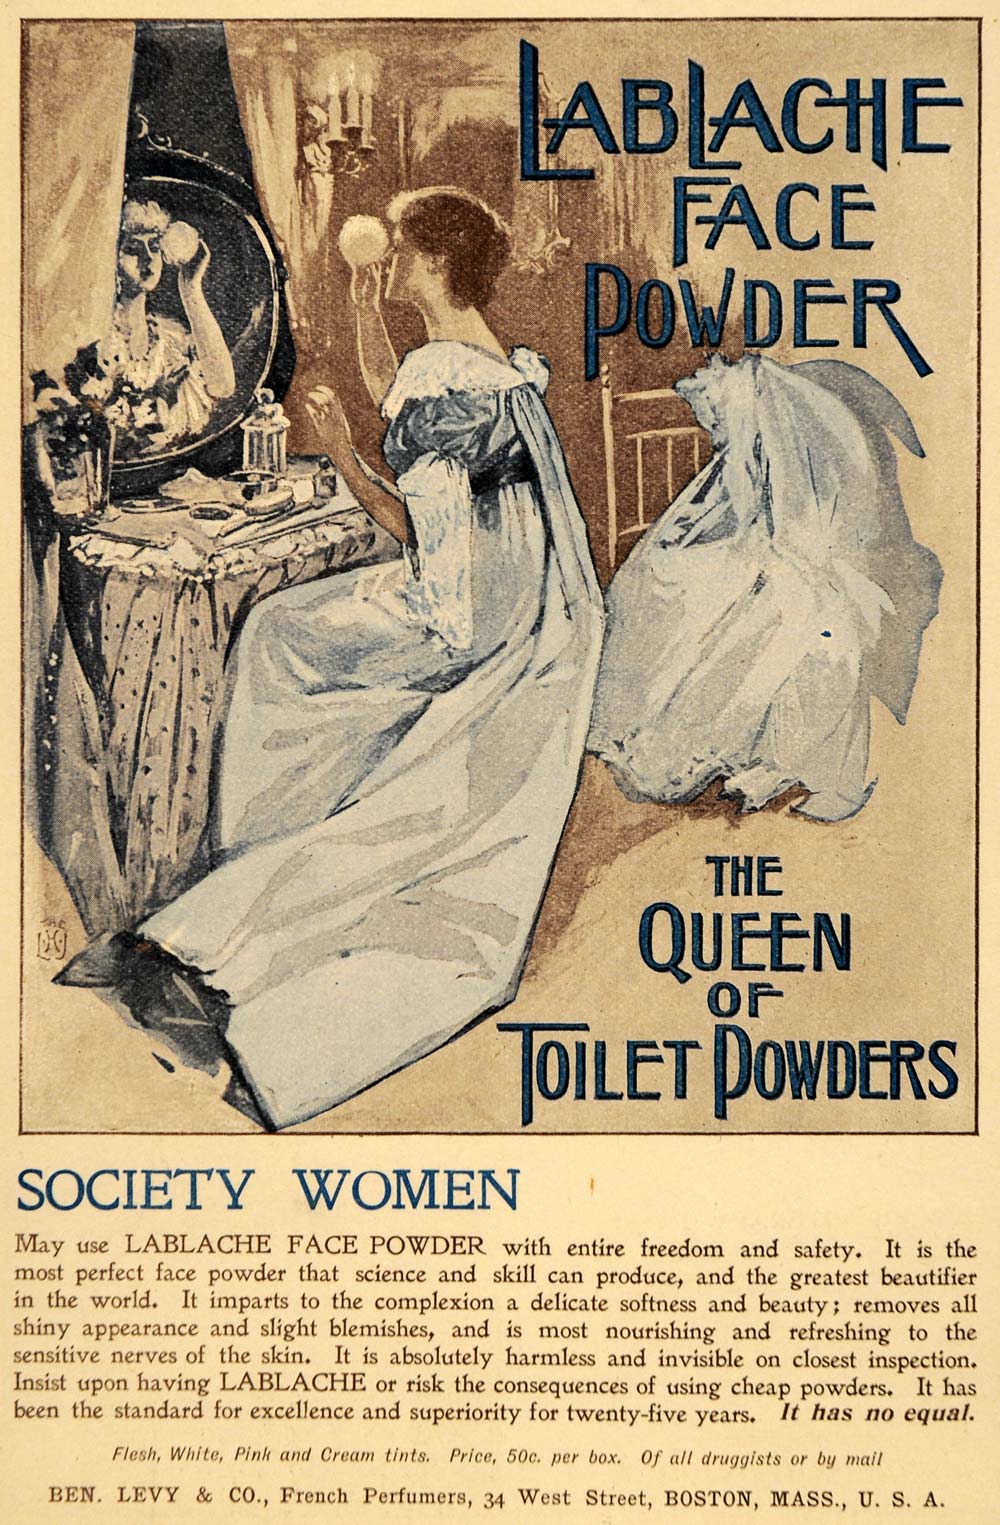 1896 Ad Ben. Levy & Co. French Perfumer Lablache Powder Face Society Women LHJ4